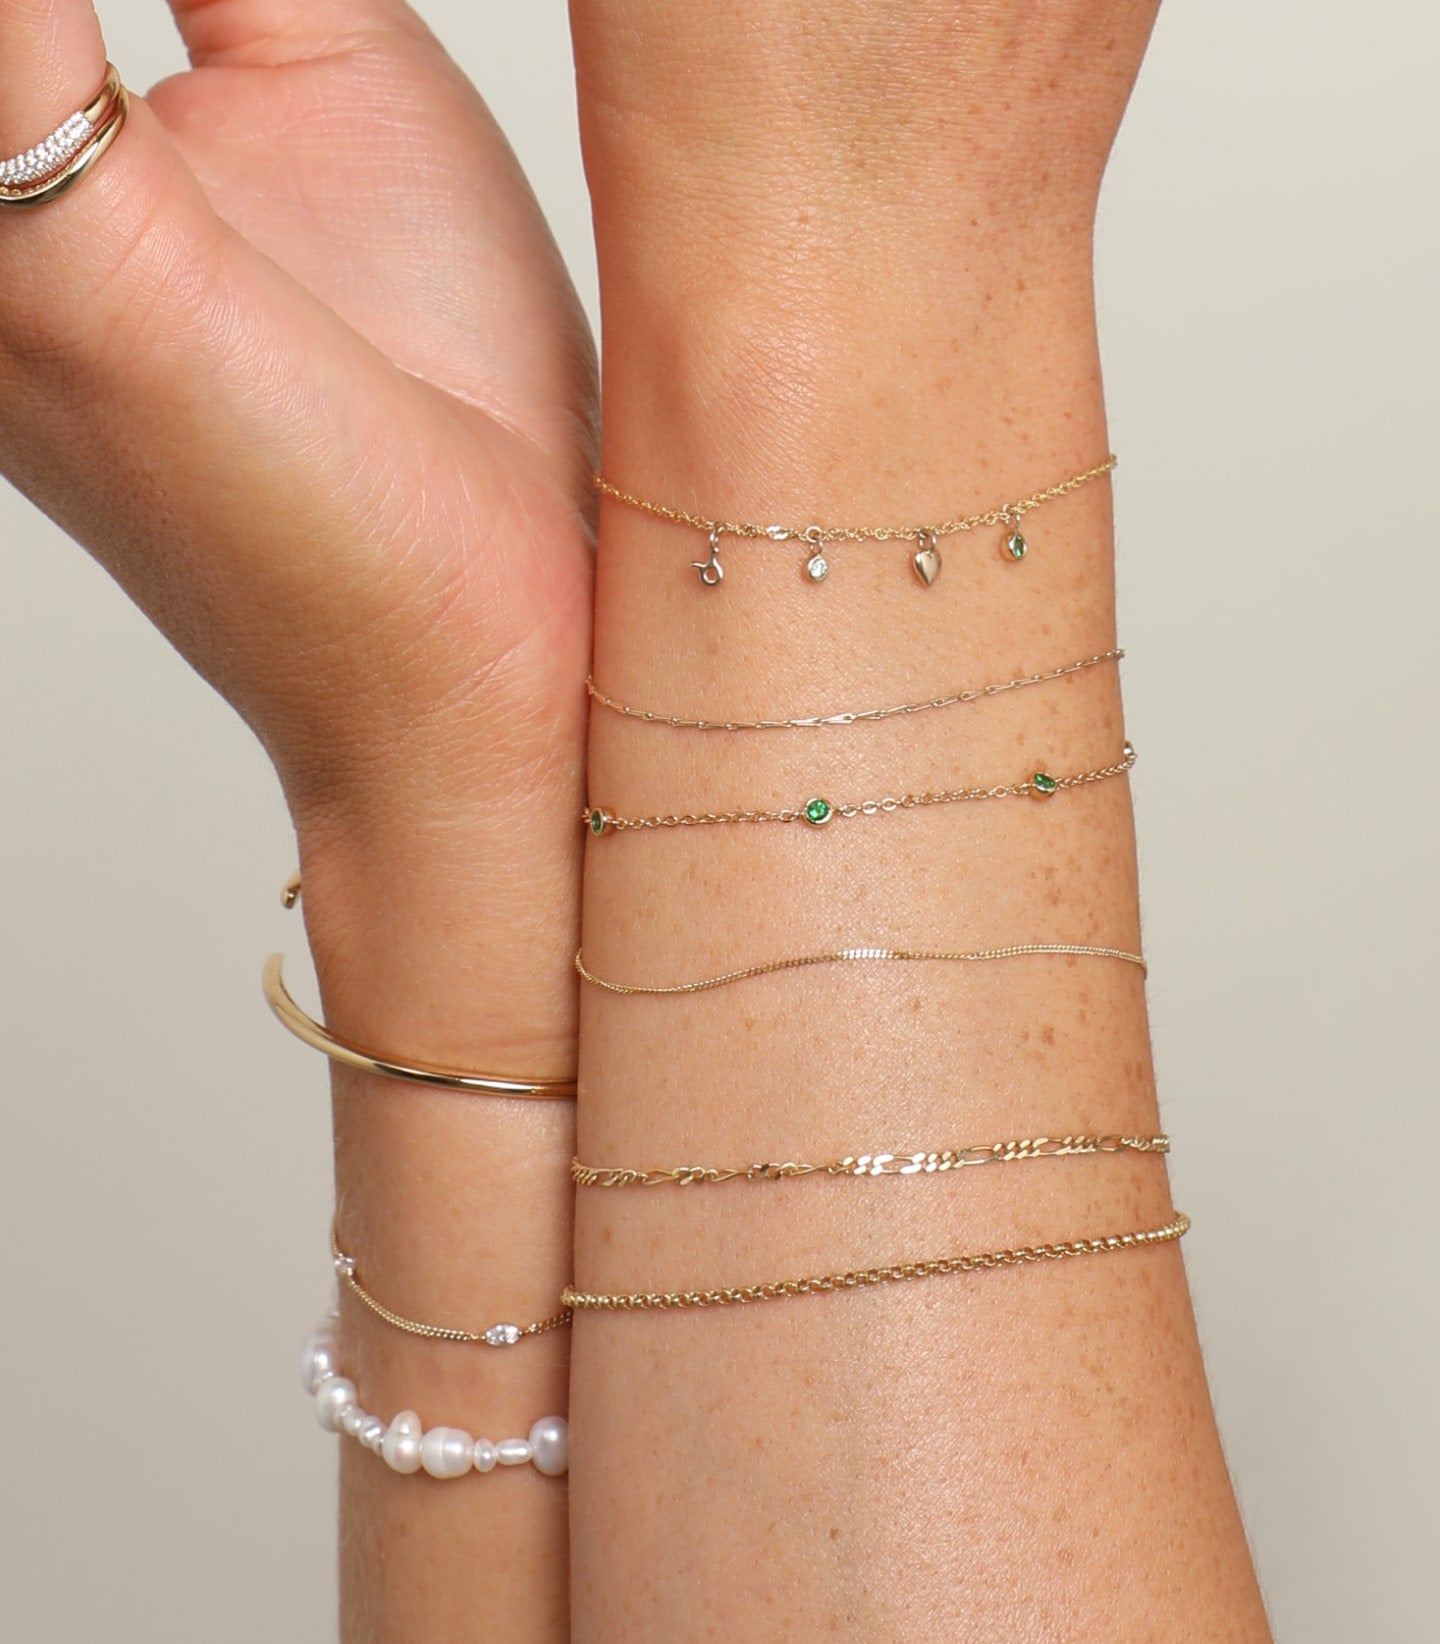 Personalized Bracelets | Waterproof Jewelry | Create Your Own